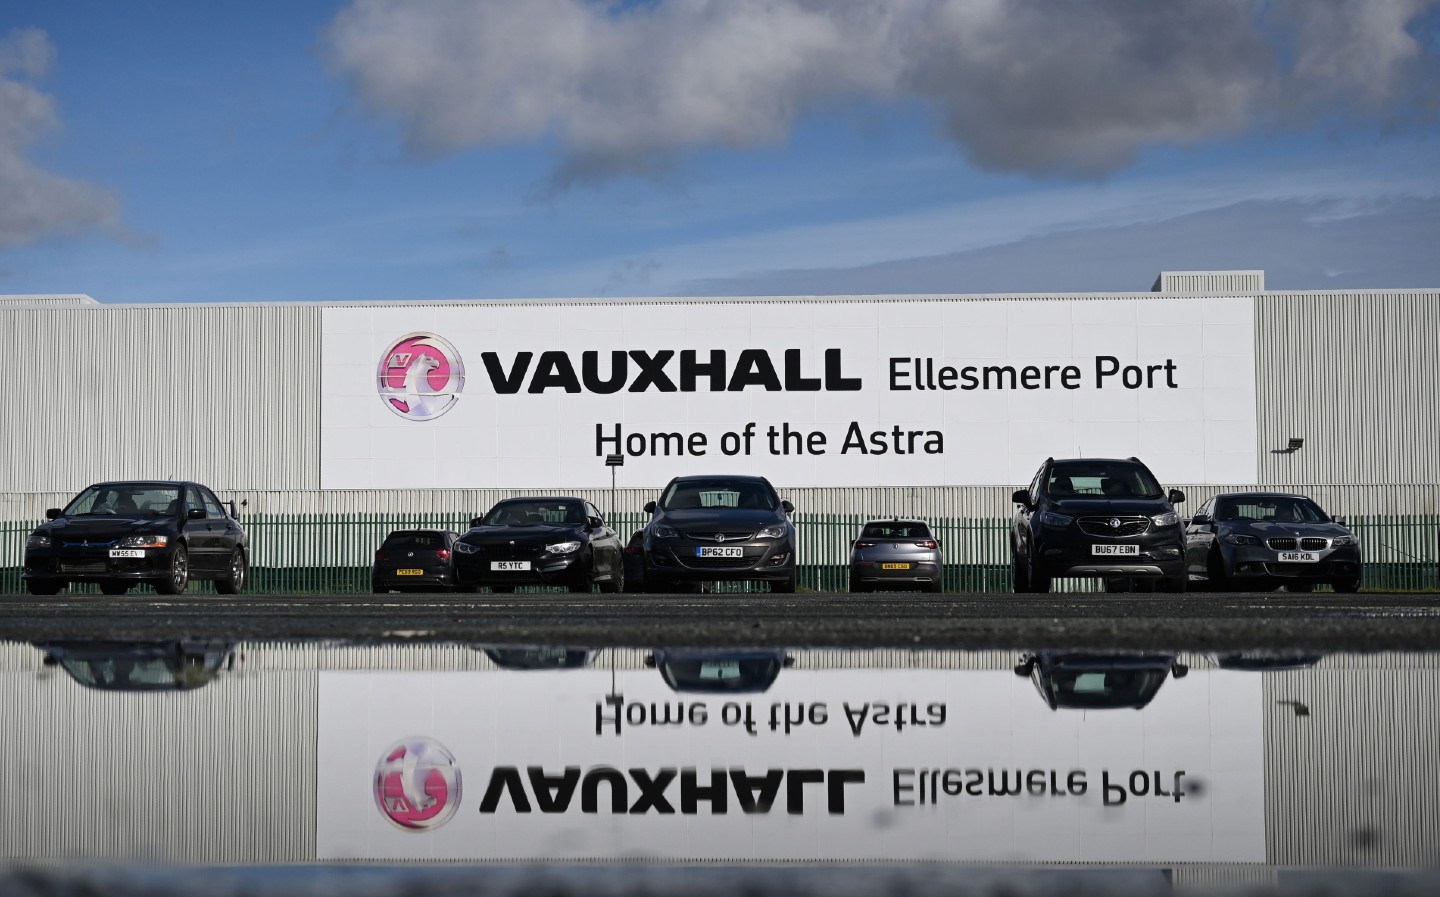 Future of Vauxhall's Ellesmere Port factory secure after decision to build electric vans